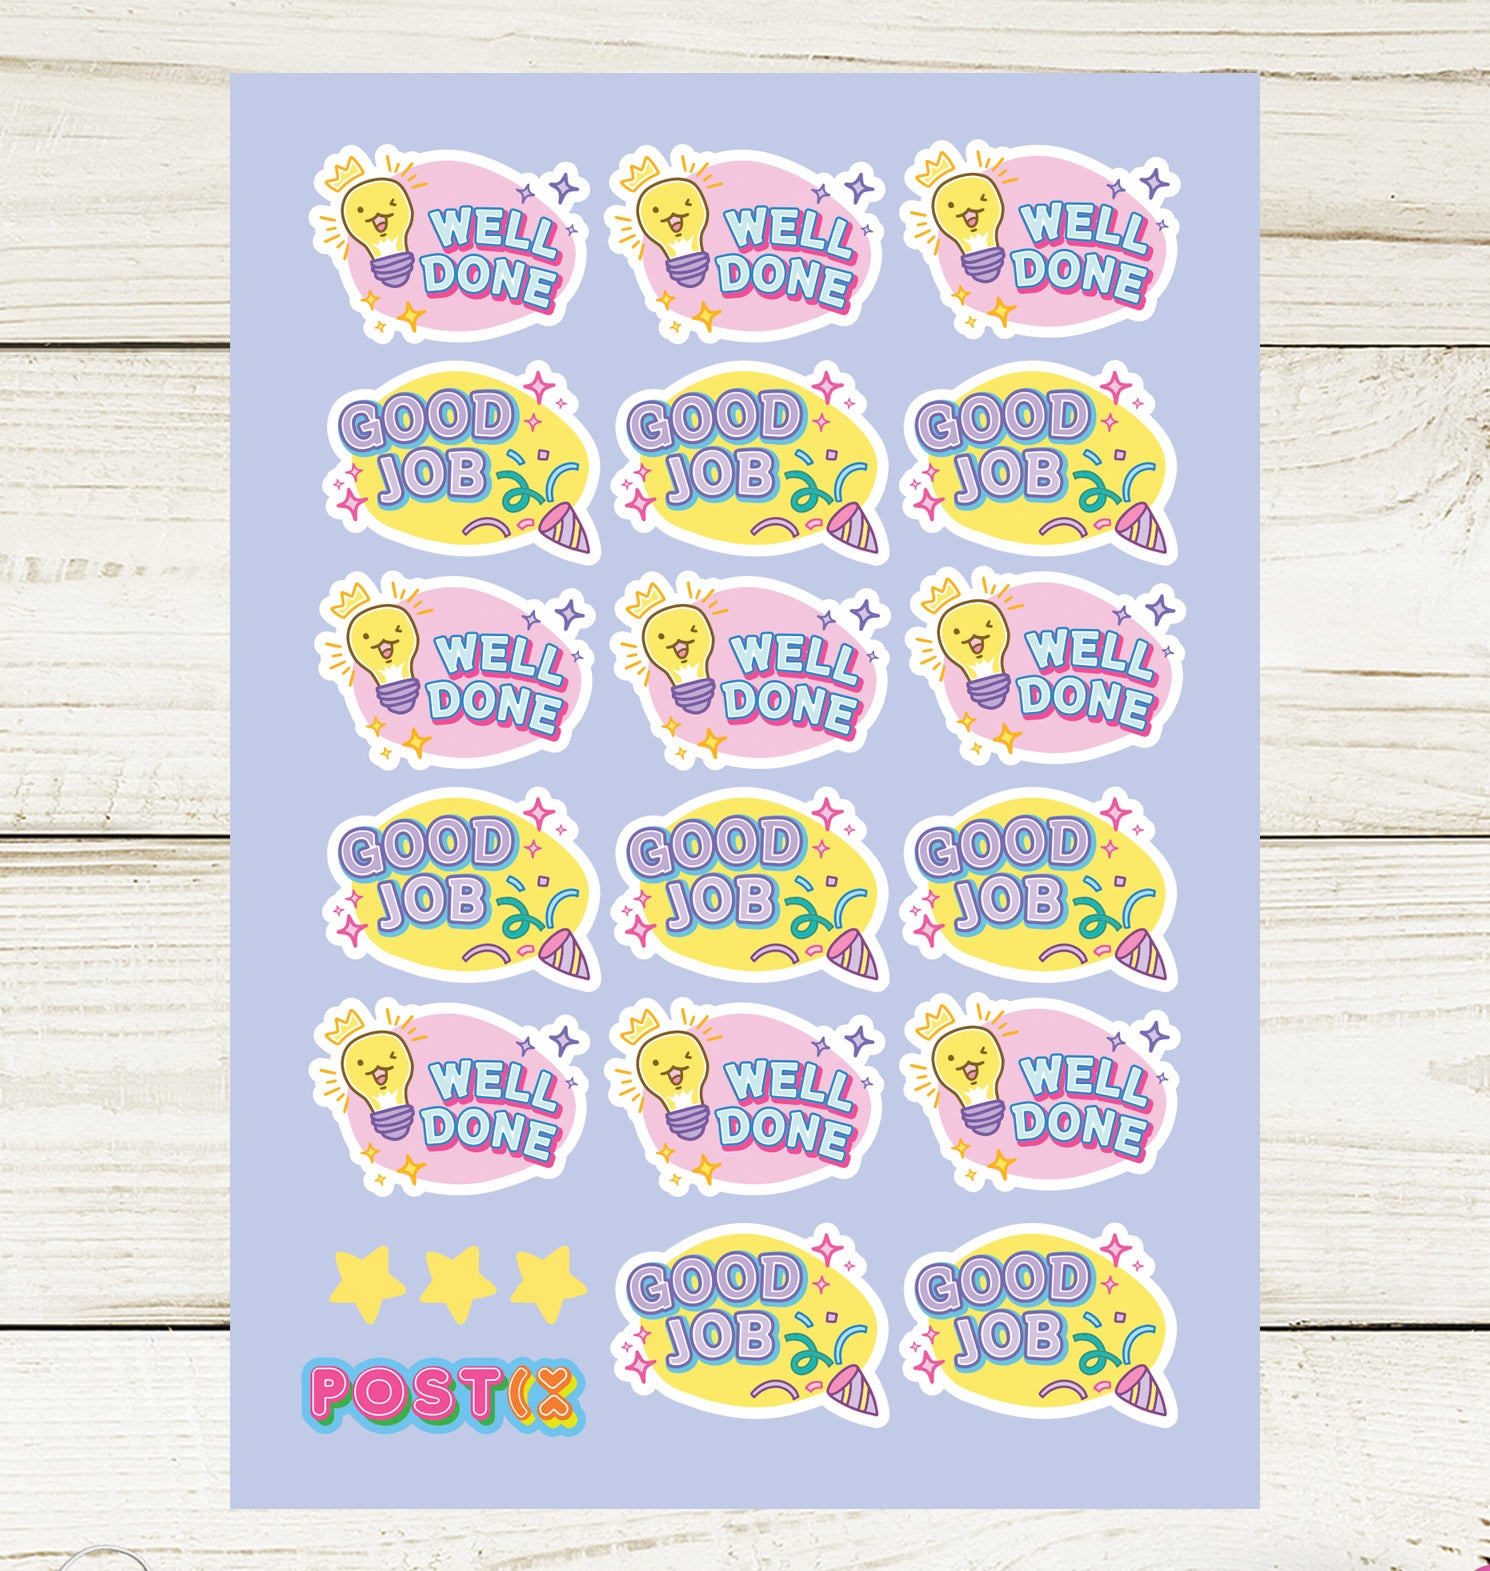 Motivational Stickers Bright, Sticker Paper Templates